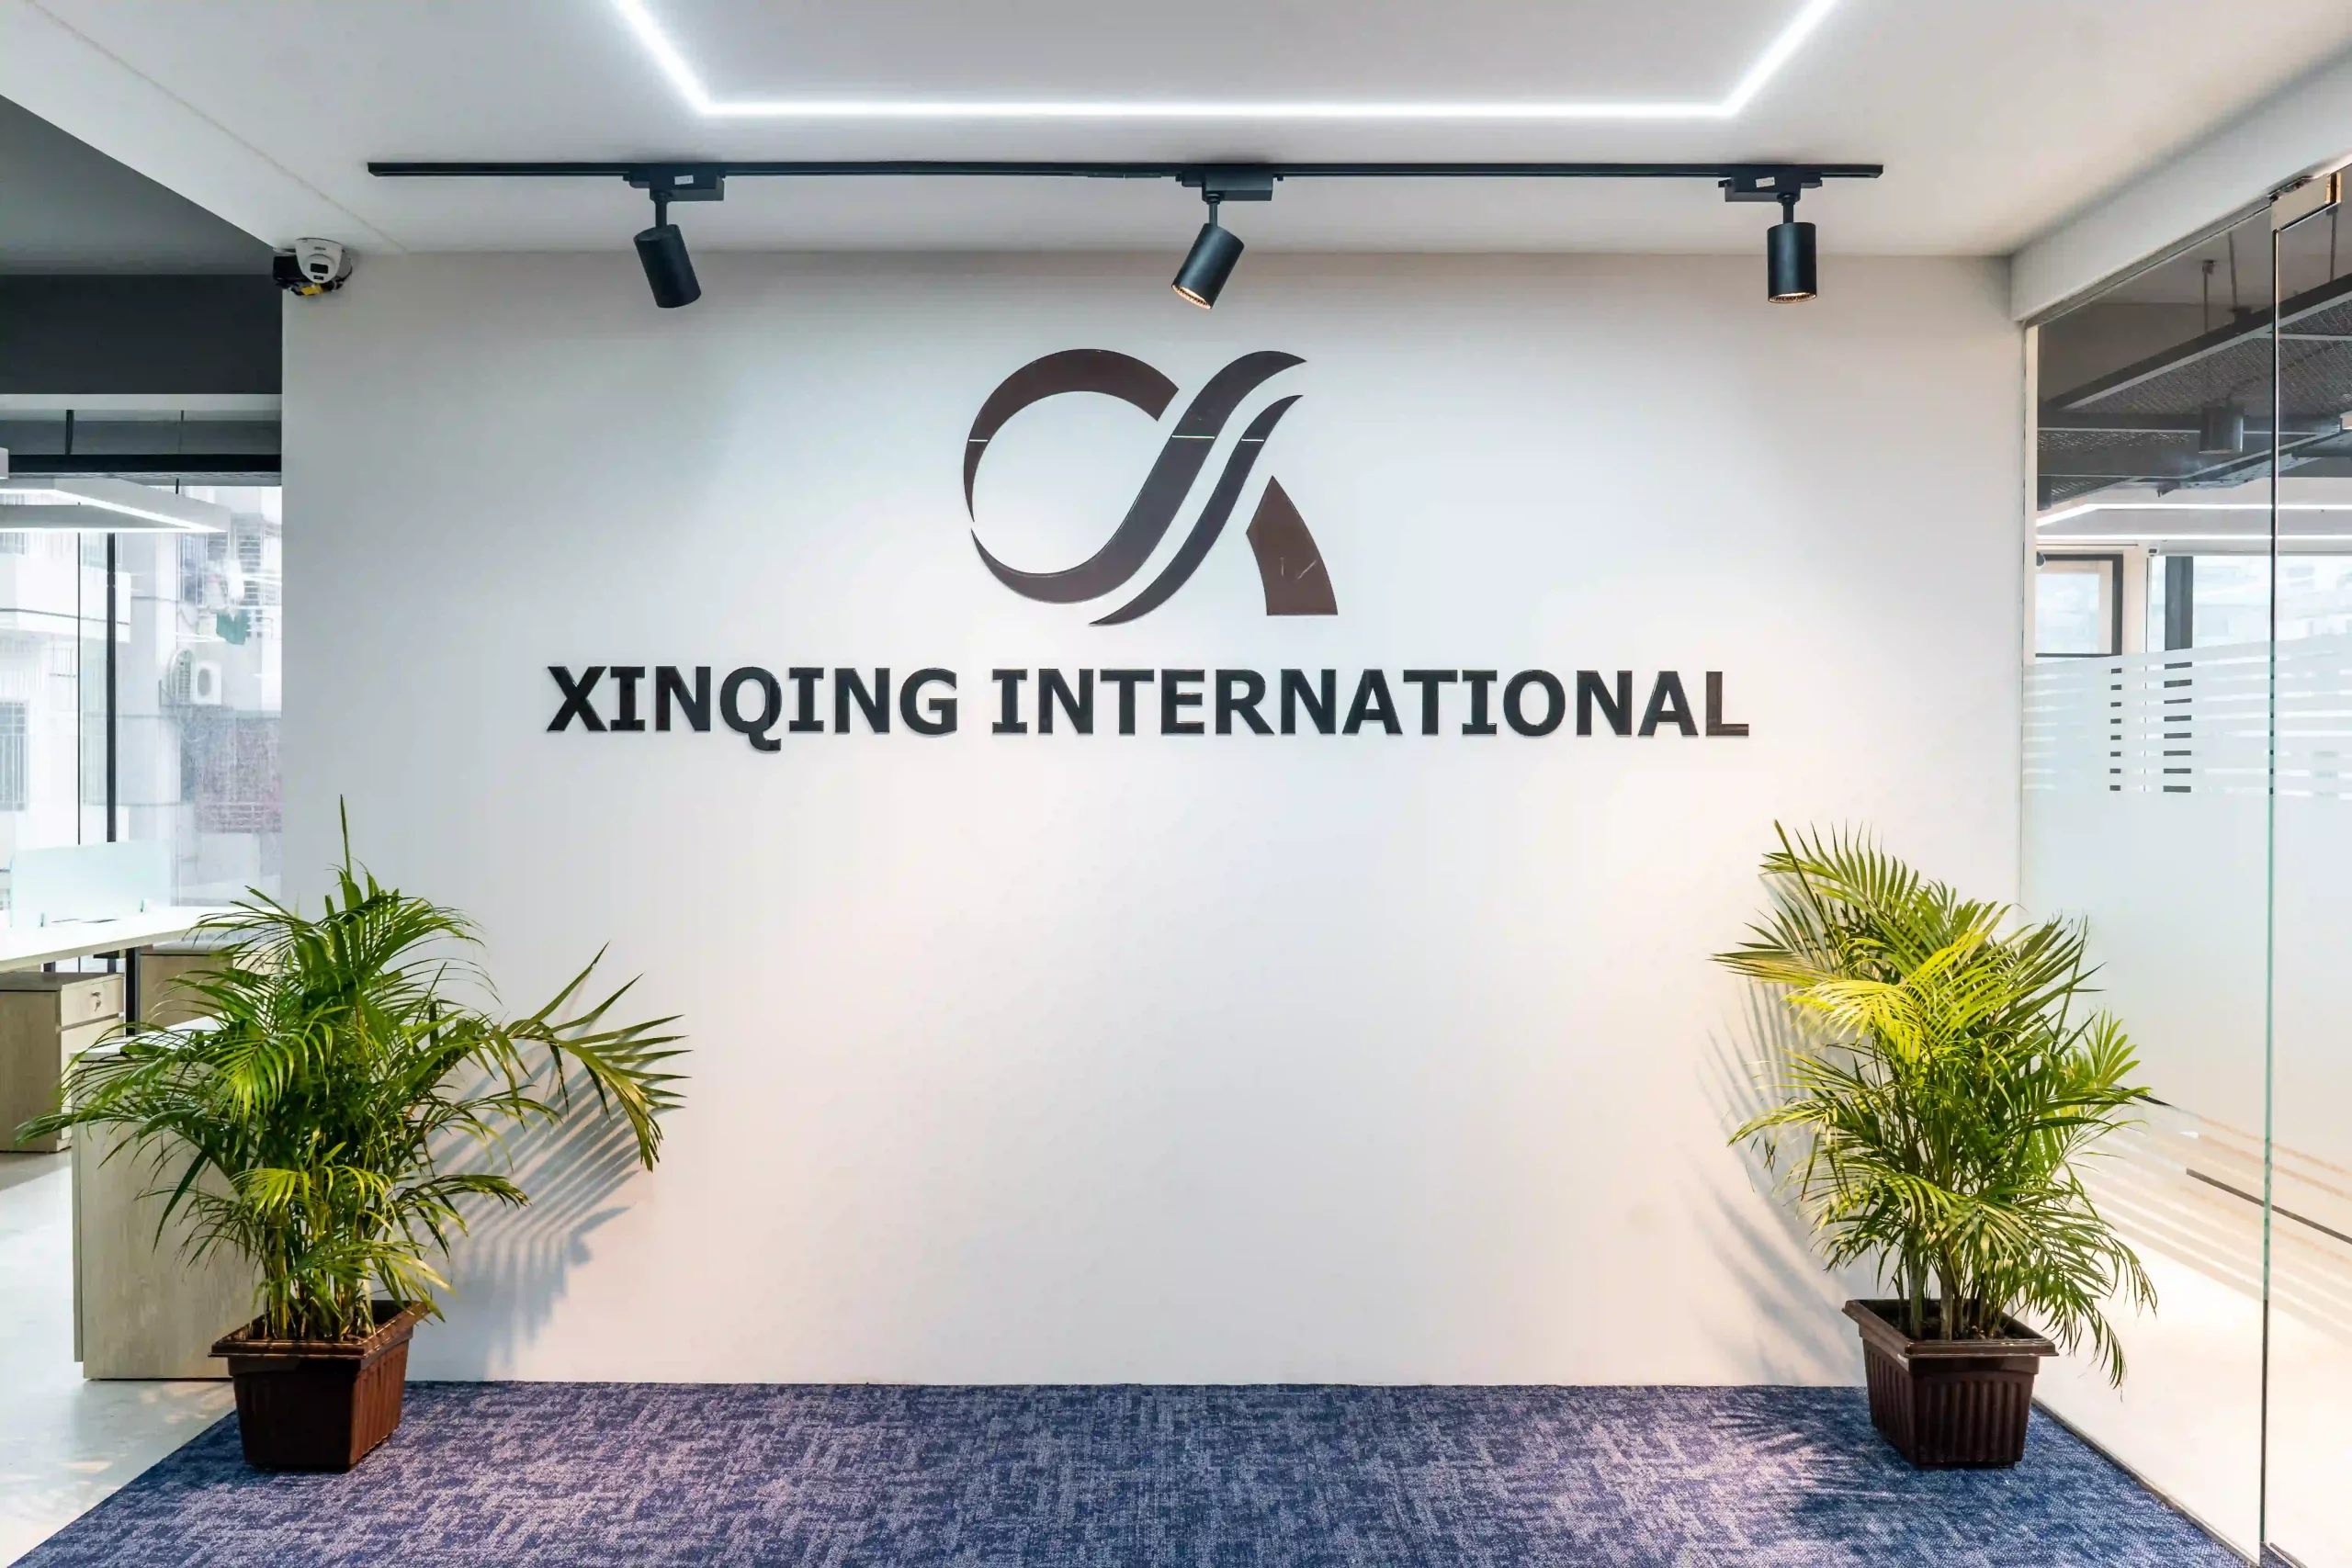 Xinqing International